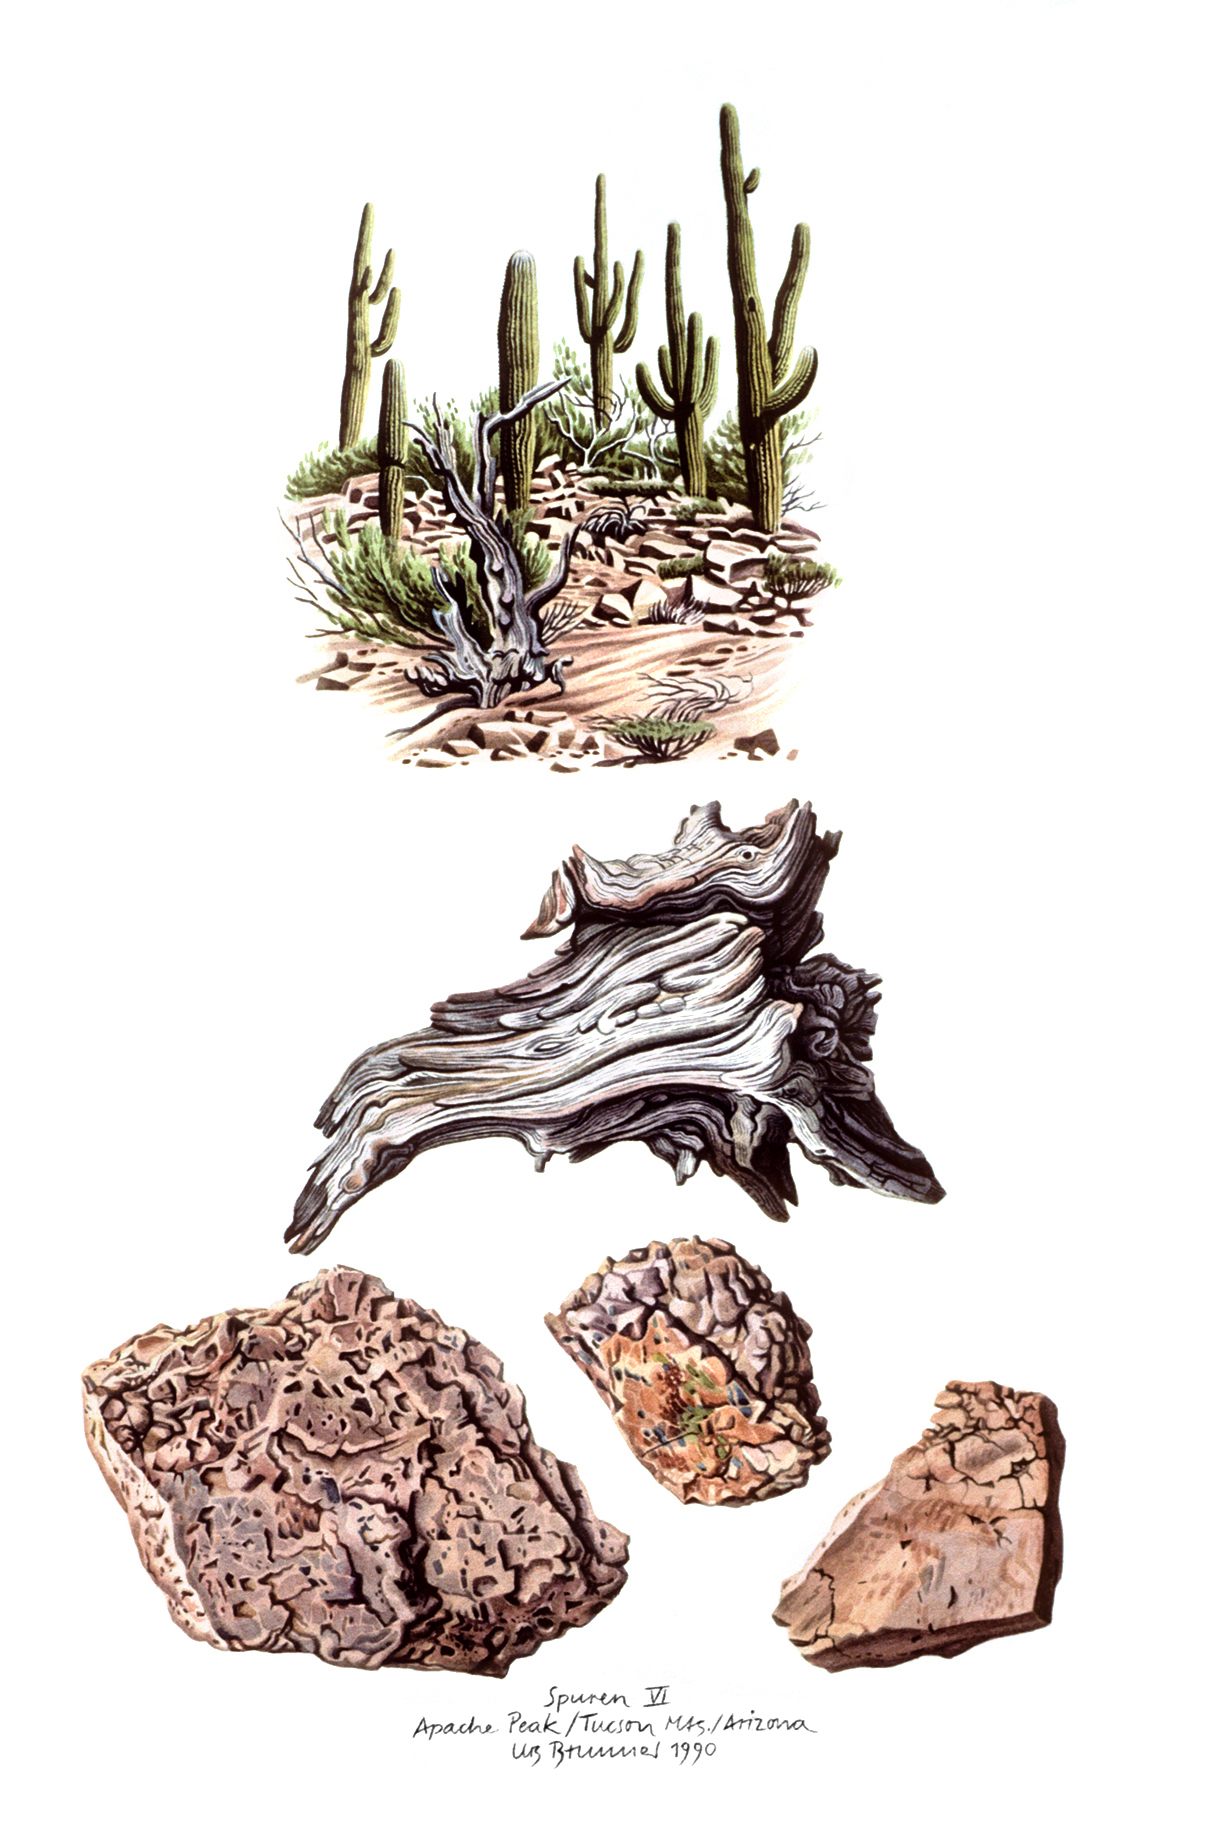 Spuren Vl / Fundstücke / Apache Peak, 1990, Aquarell auf Papier, 40 x 30 cm